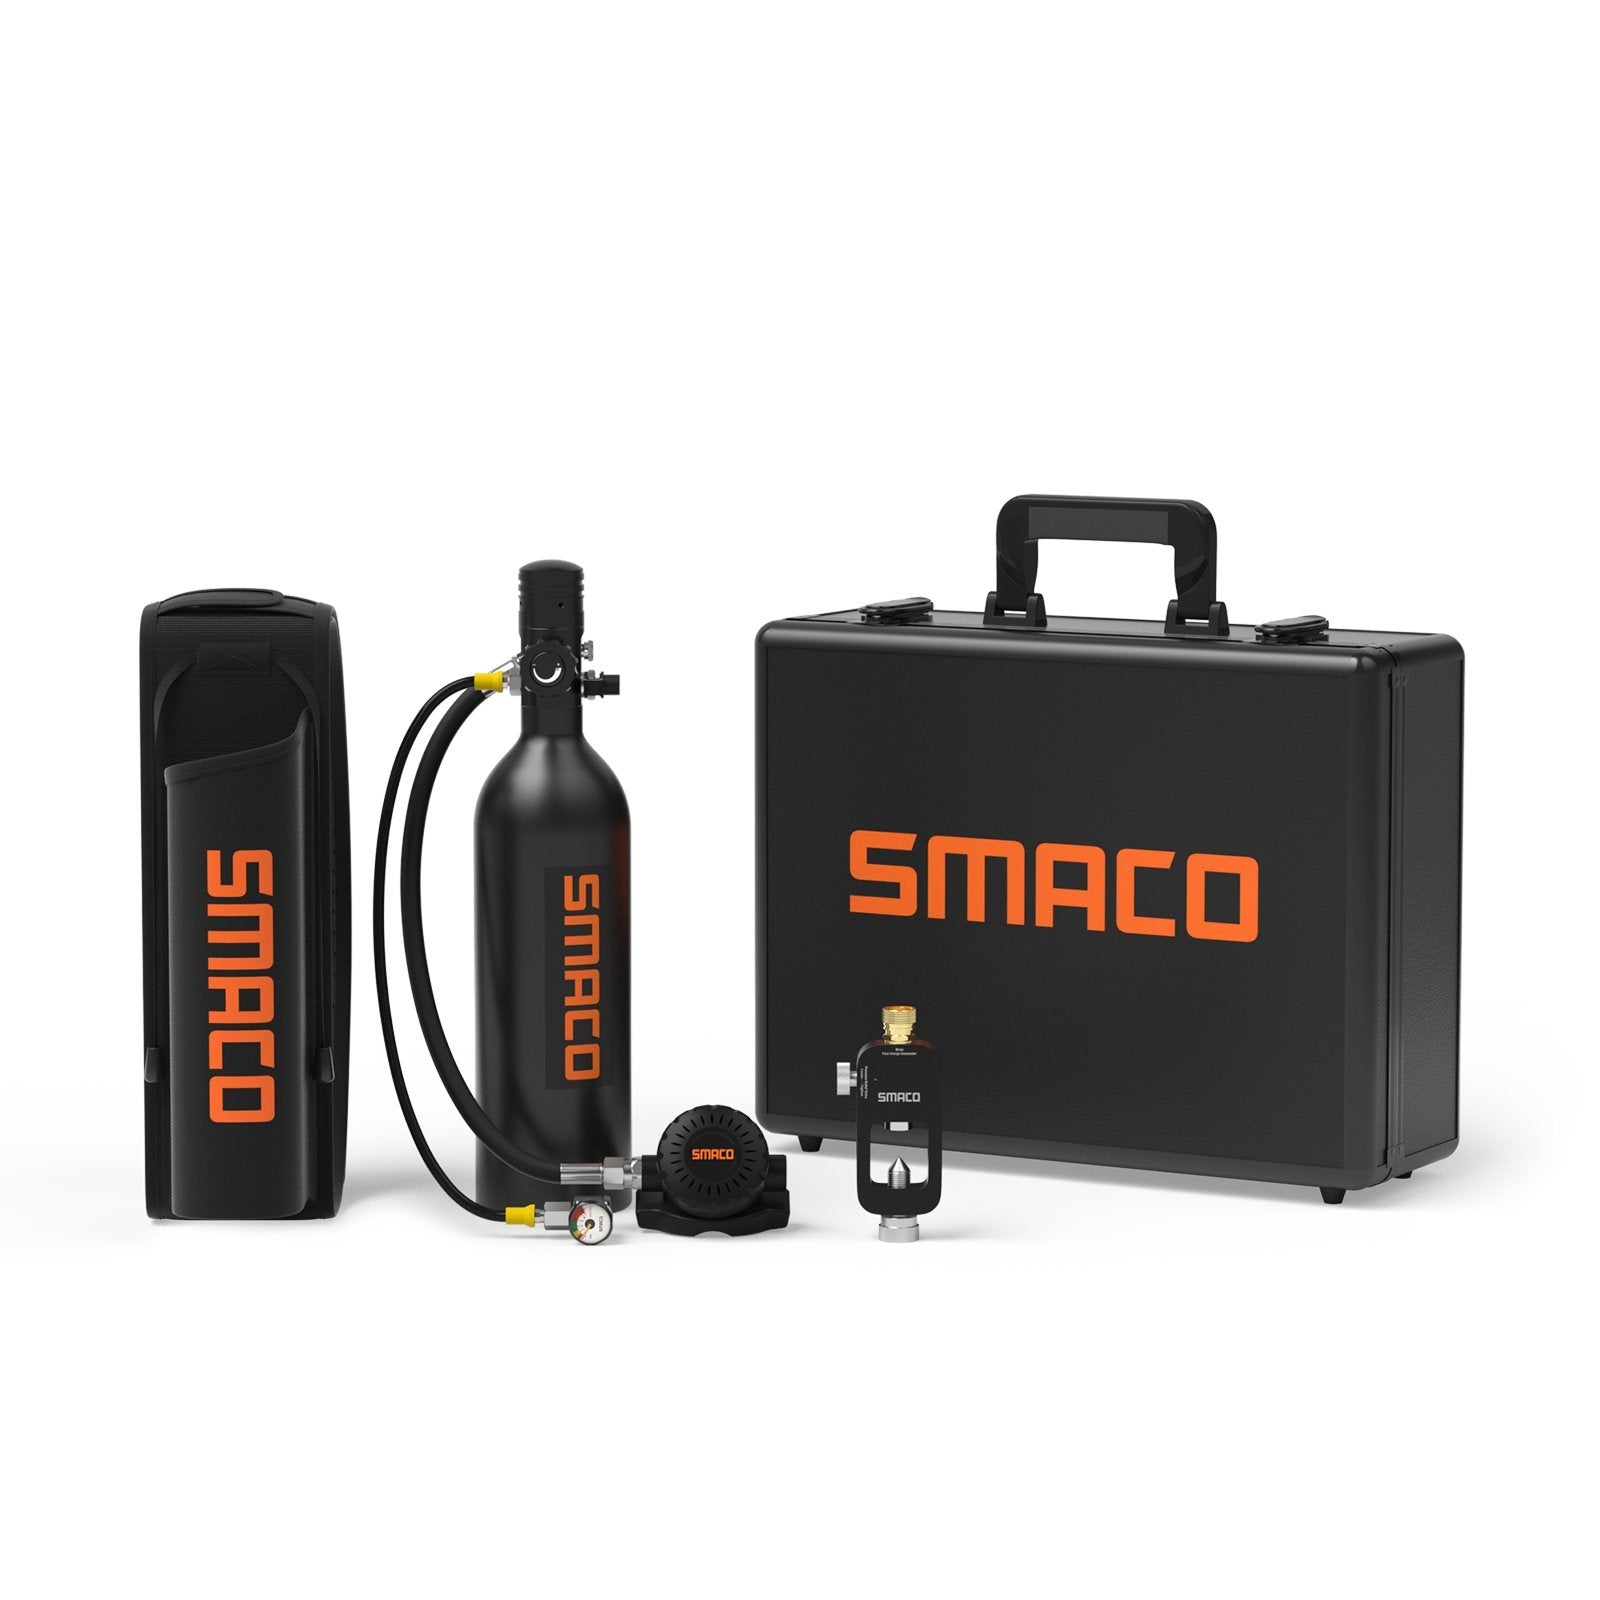 SMACO S400Pro Mini Scuba Tank Scuba Diving Equipment - SmacoSports